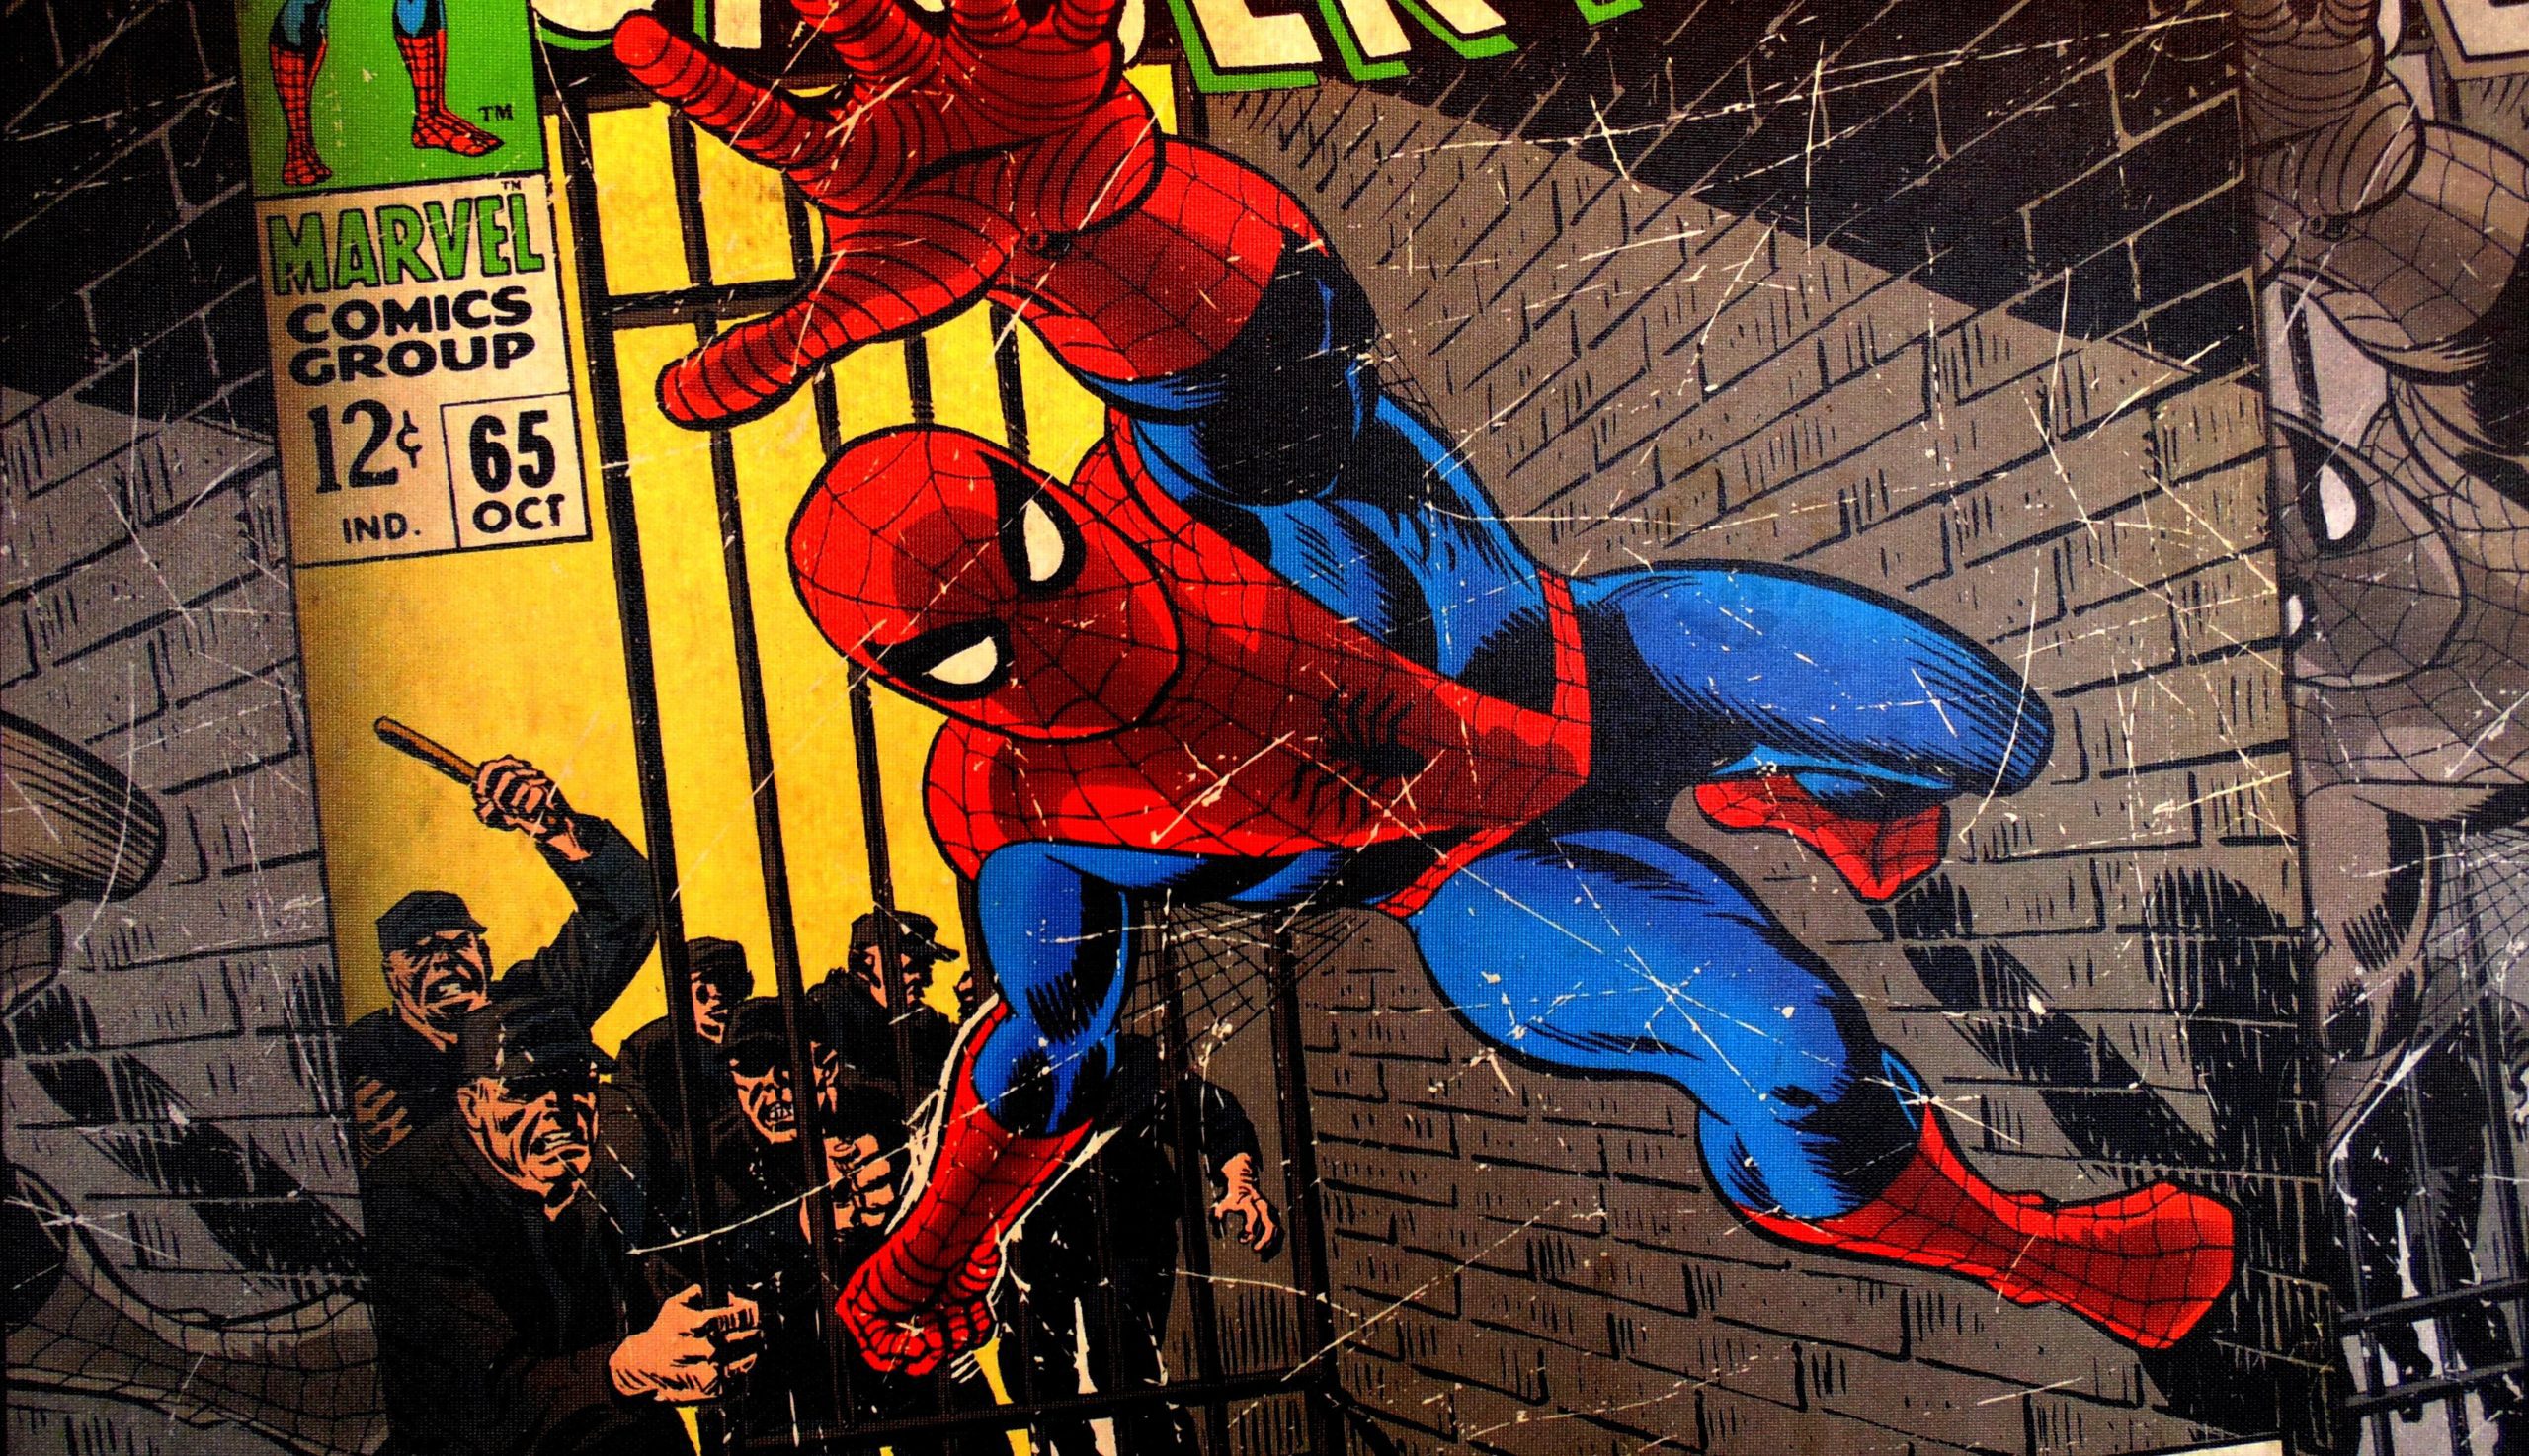 Spiderman Comic | Image by Marvel Comics